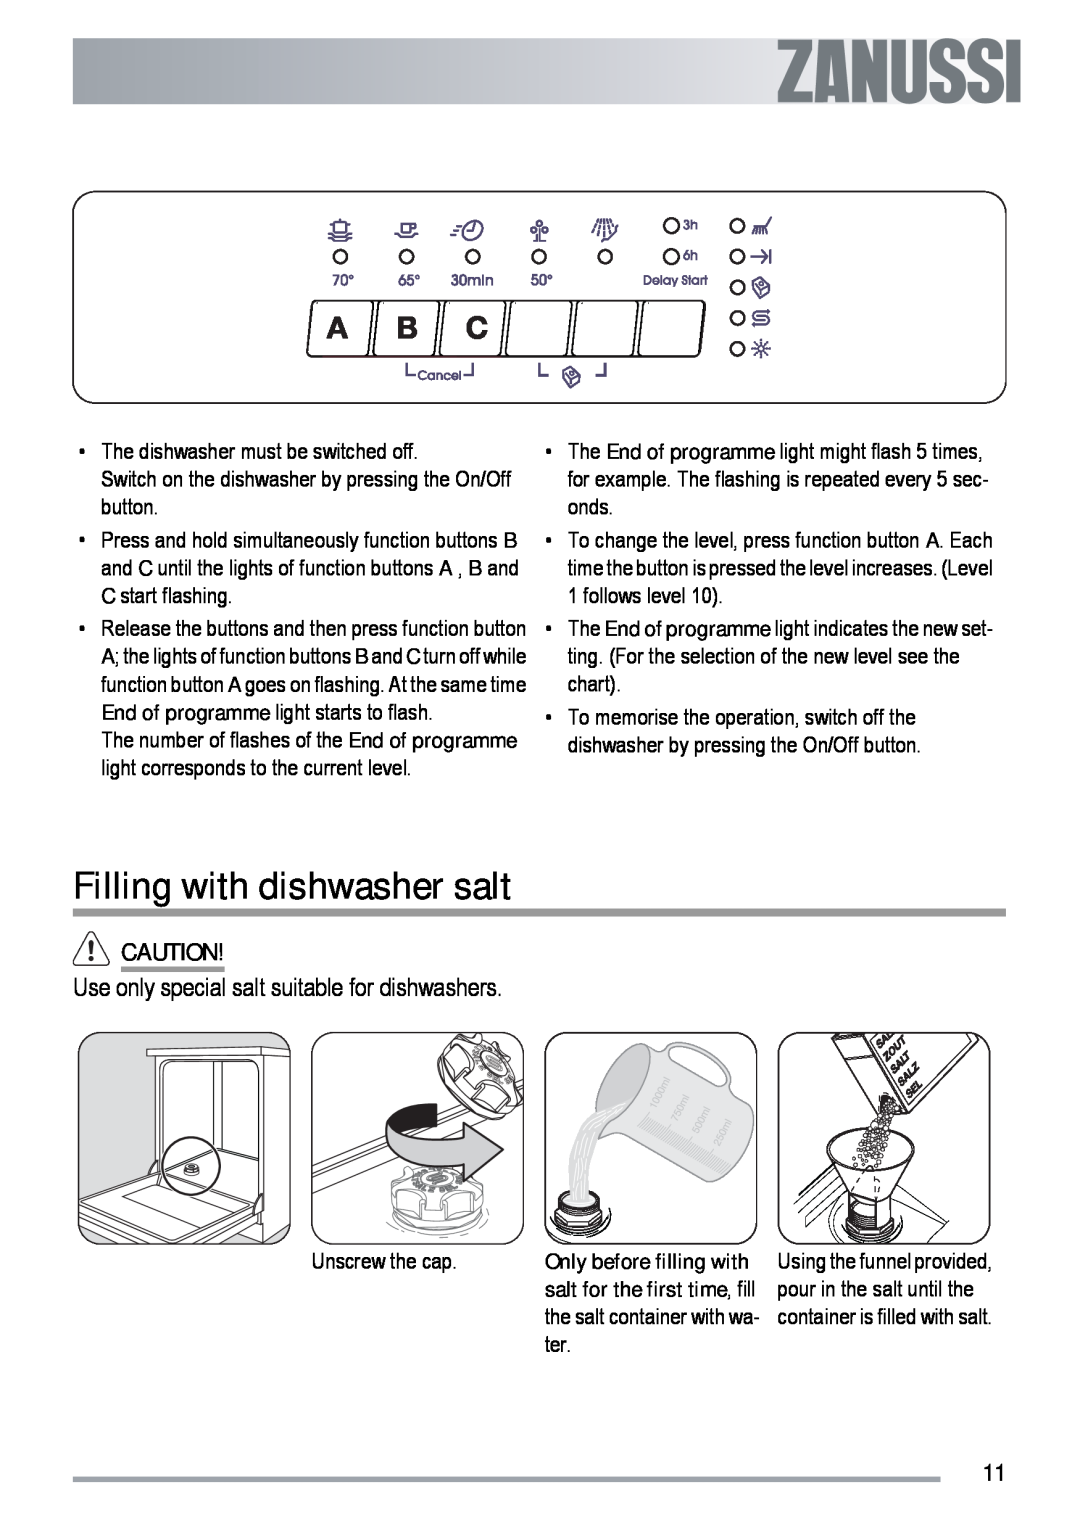 Zanussi ZDF 312 user manual Filling with dishwasher salt, Use only special salt suitable for dishwashers 